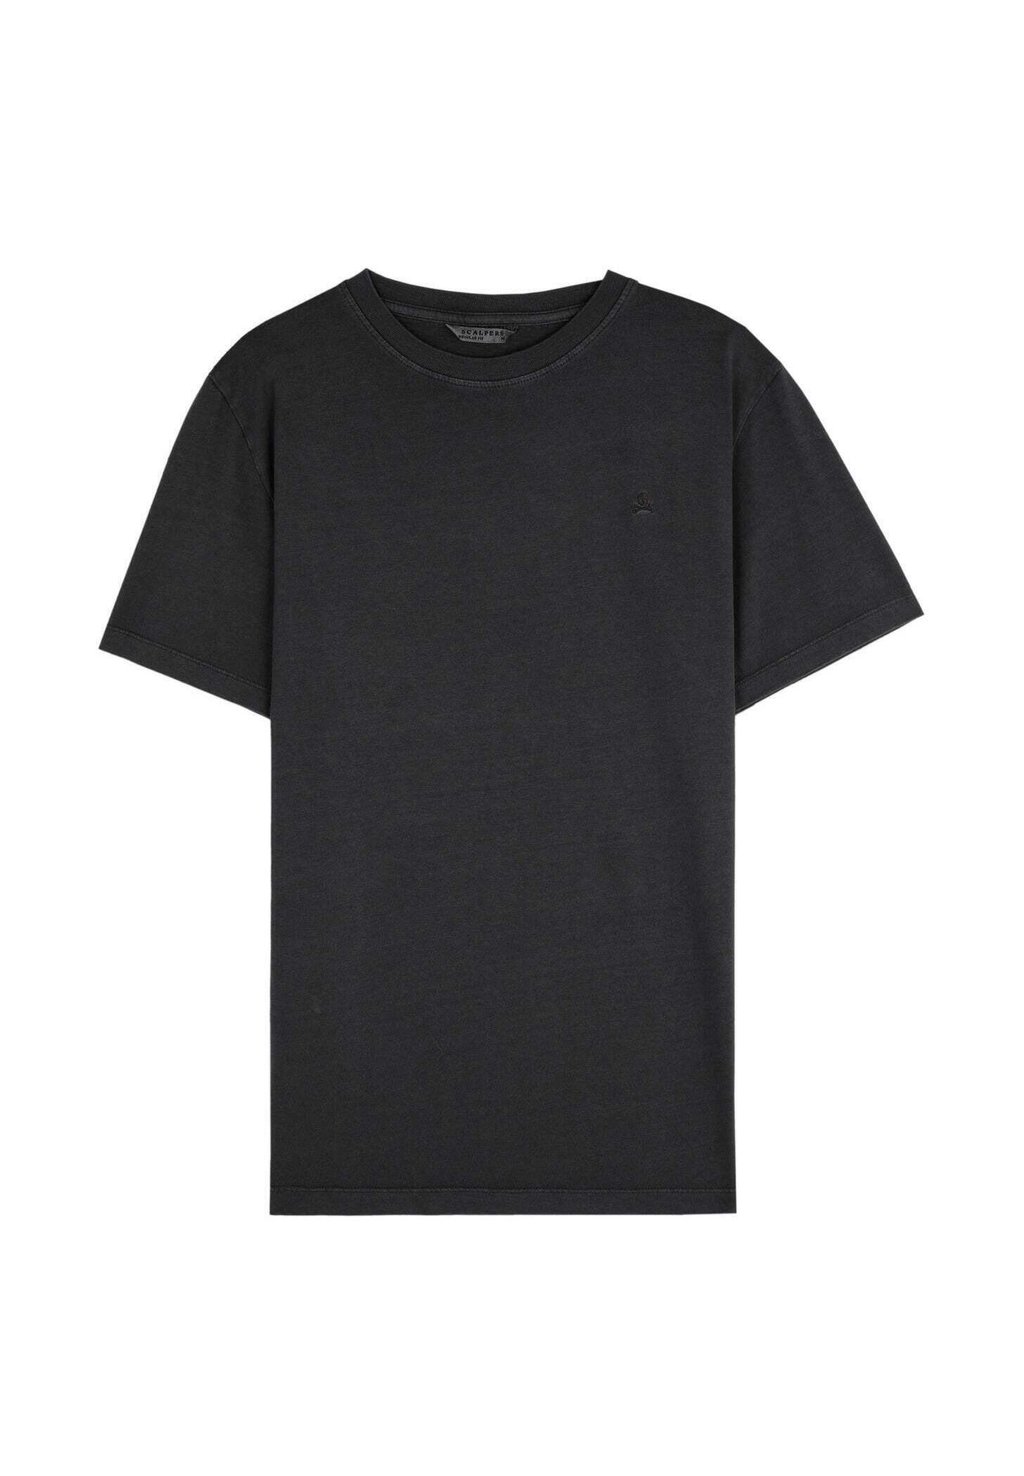 Базовая футболка SKULL Scalpers, темно-серый базовая футболка nos skull tee scalpers цвет off white